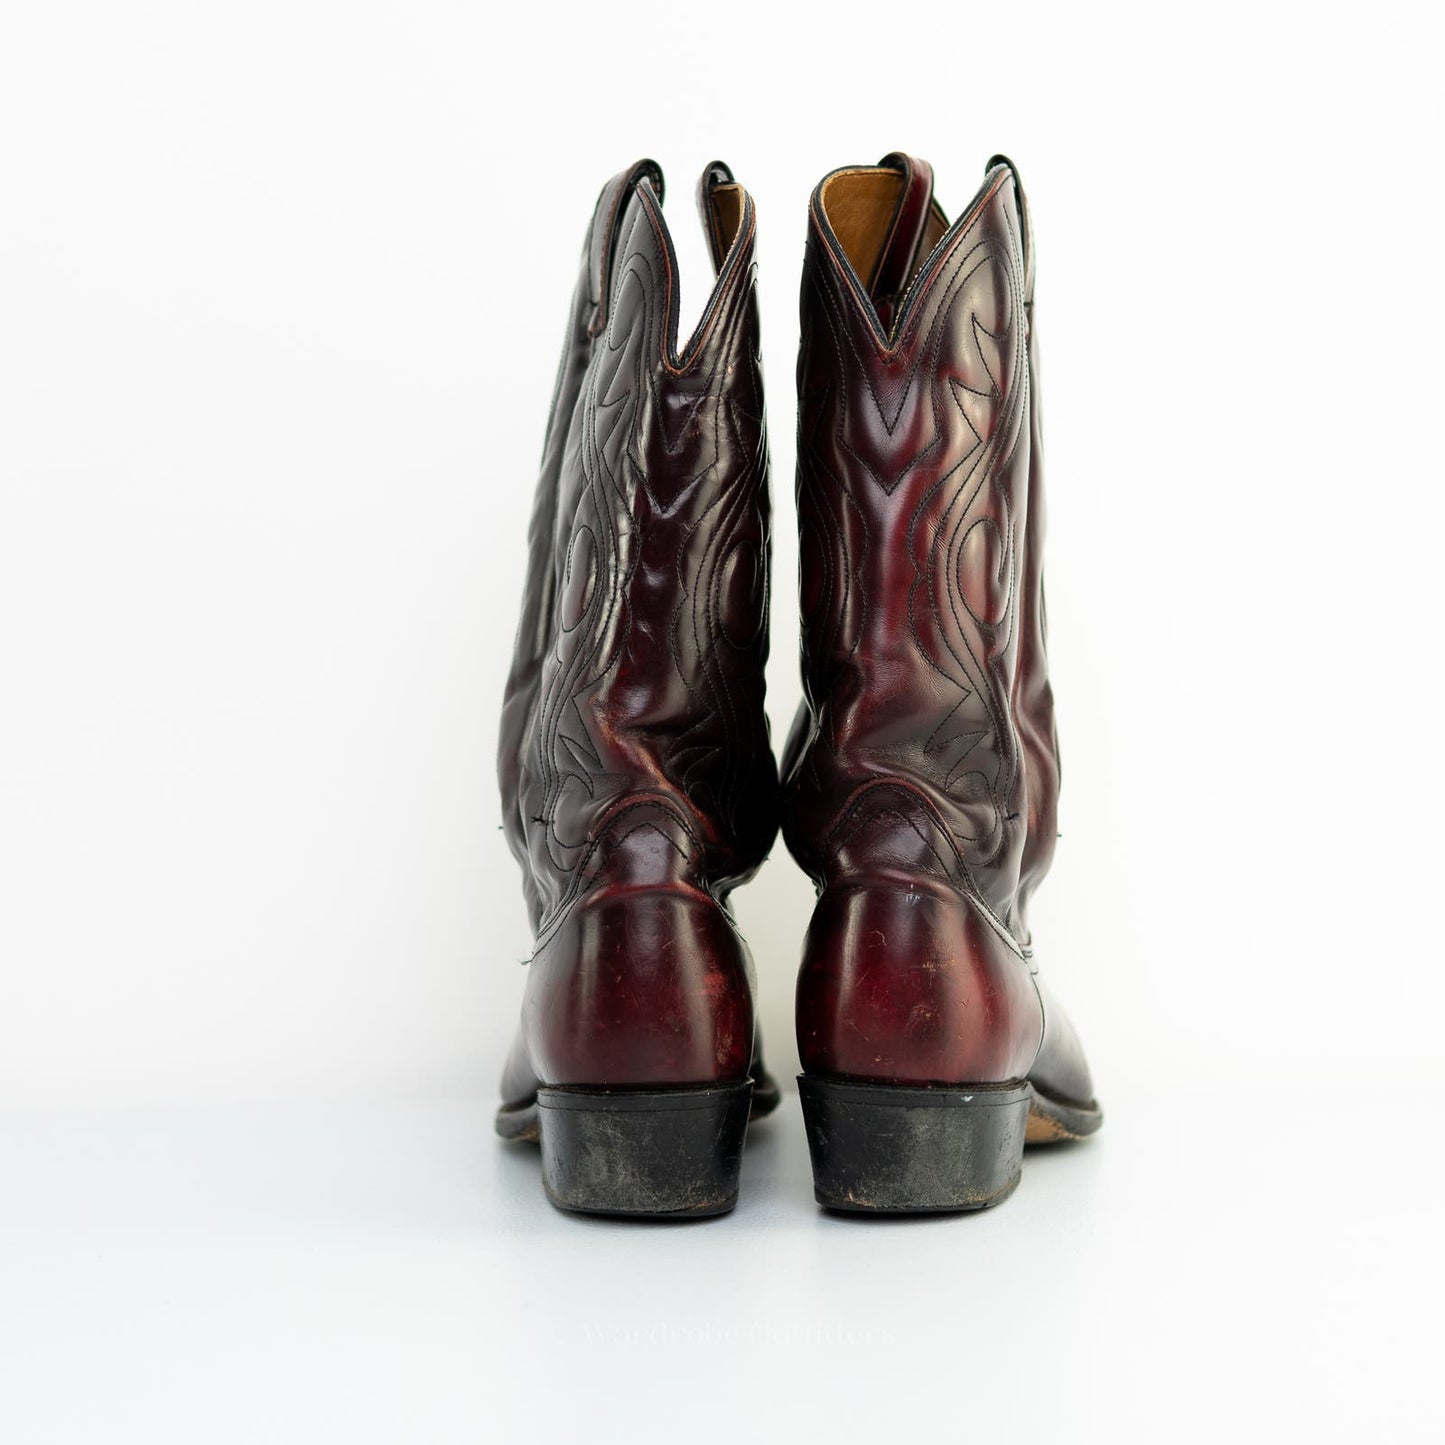 Vintage 70s ACME Thunderbird Cowboy Western Boots - 8